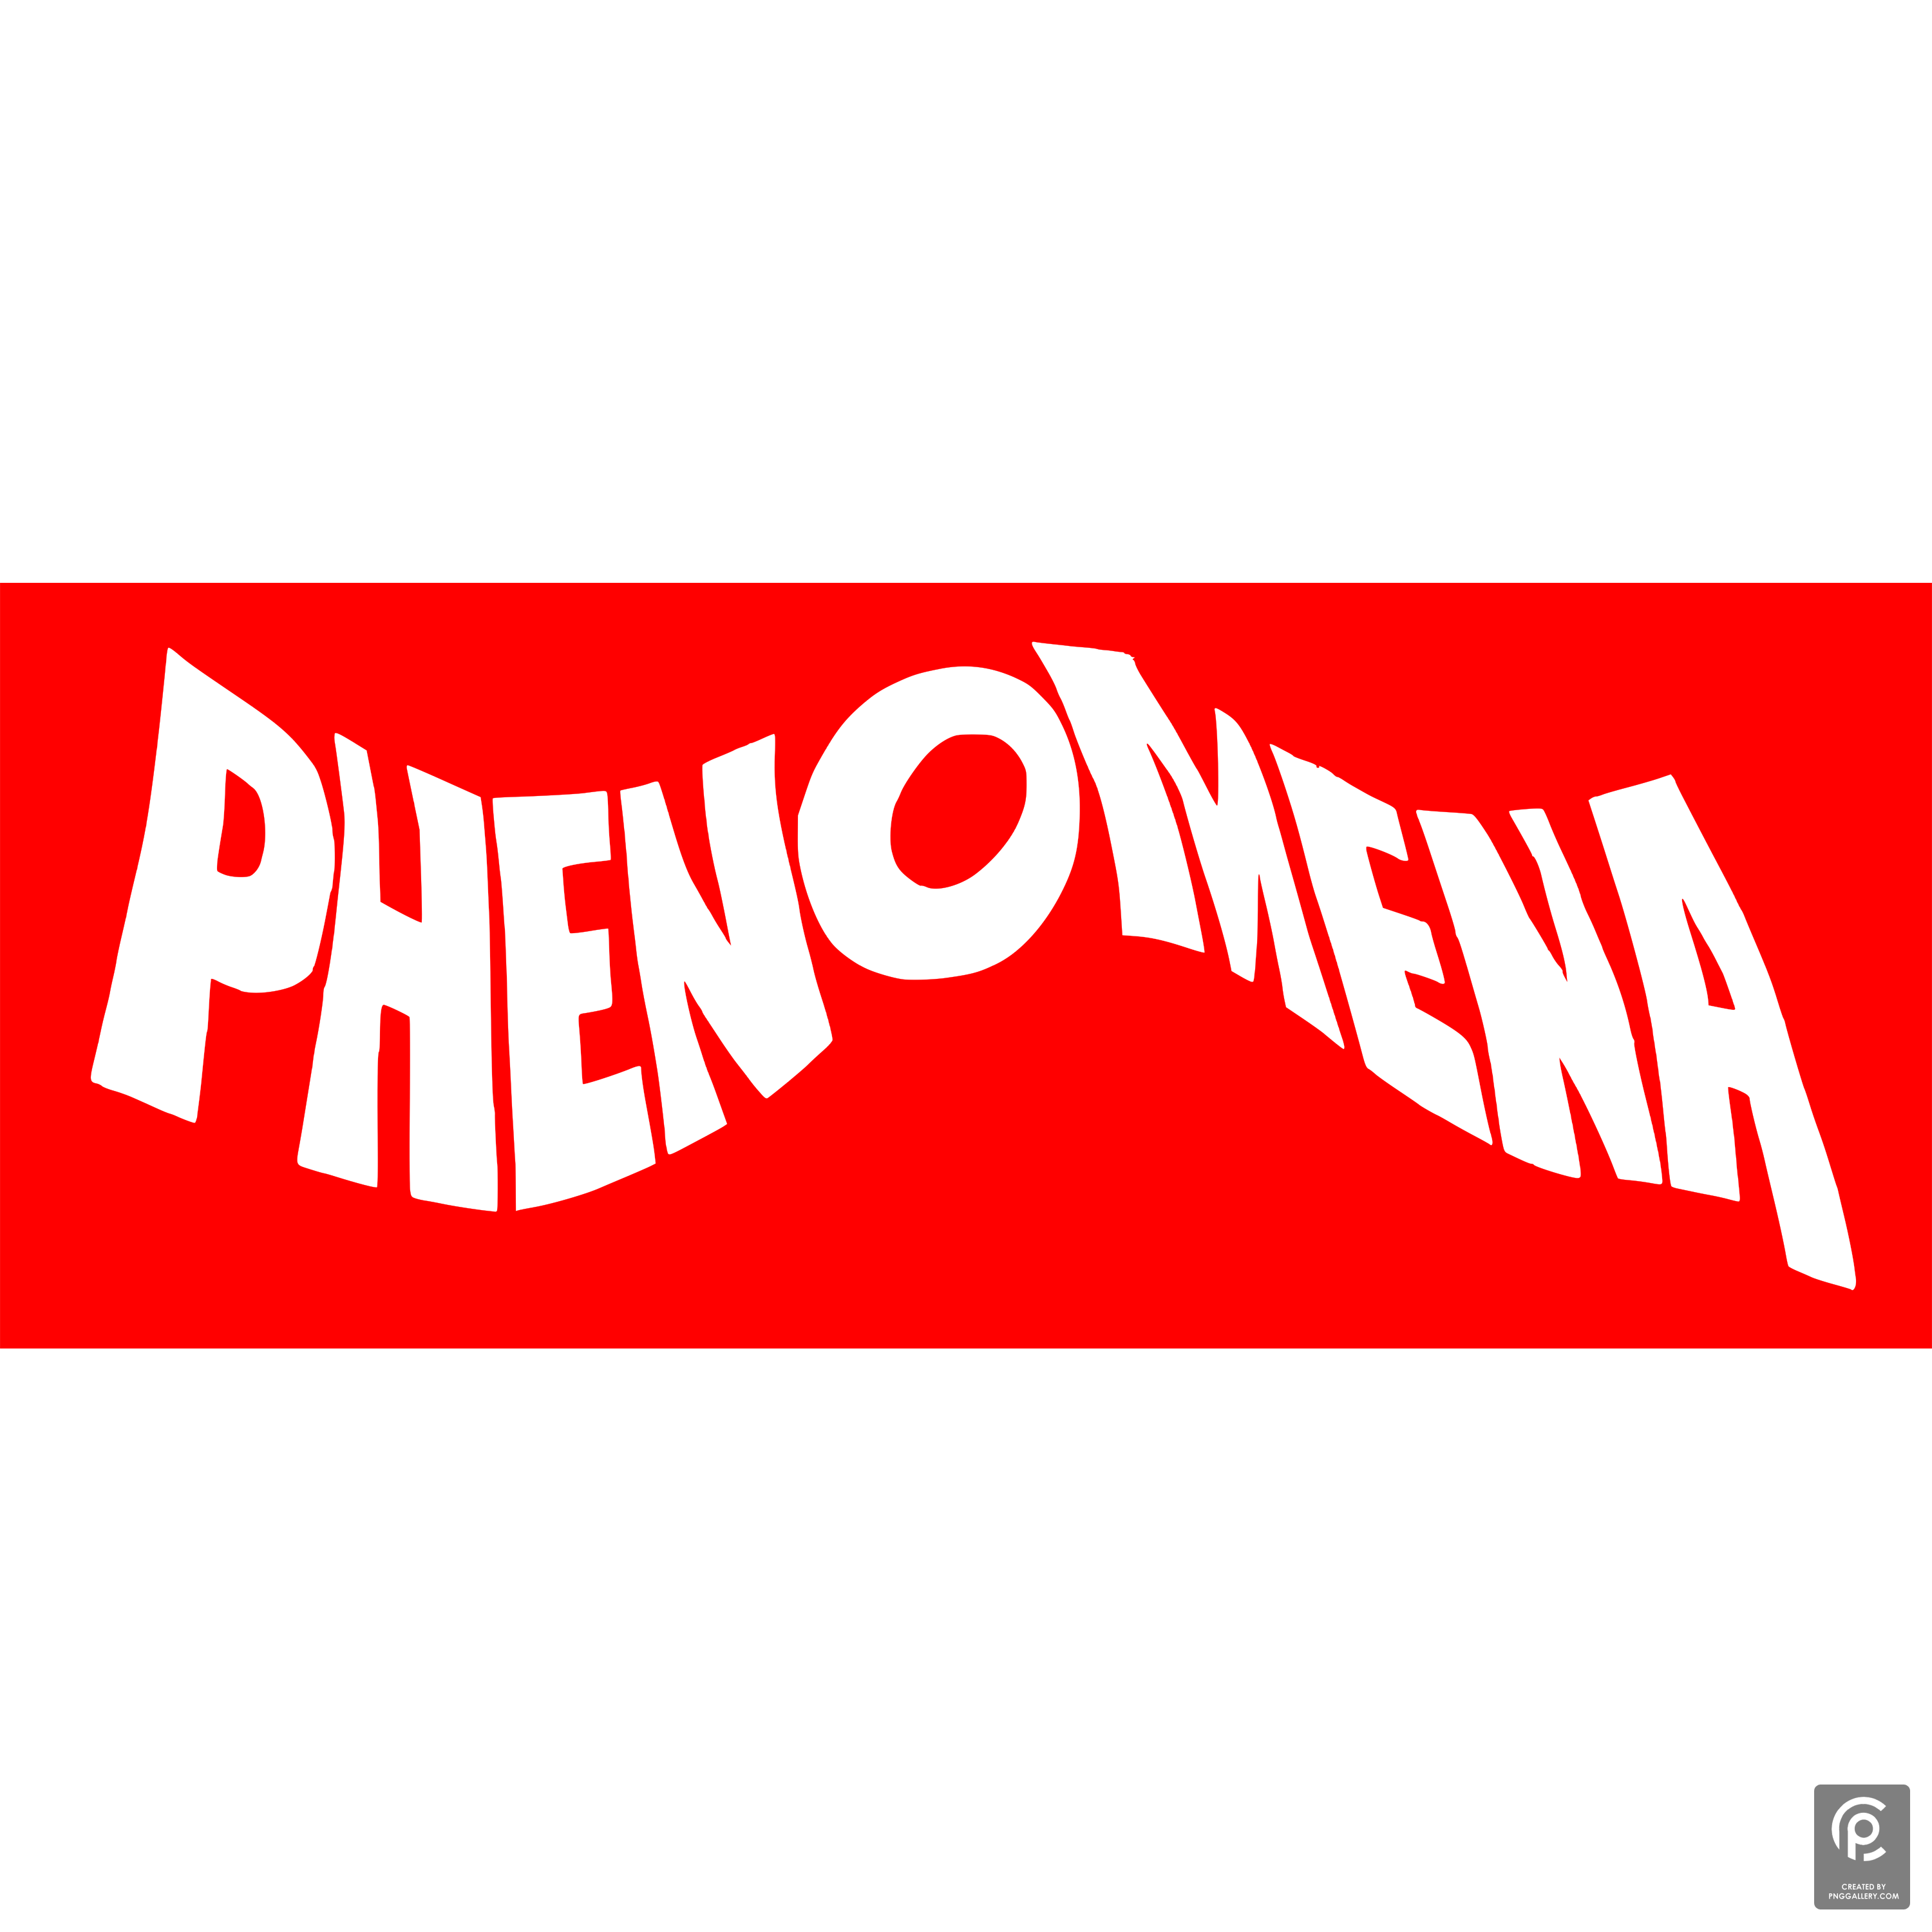 Phenomena Logo Transparent Photo